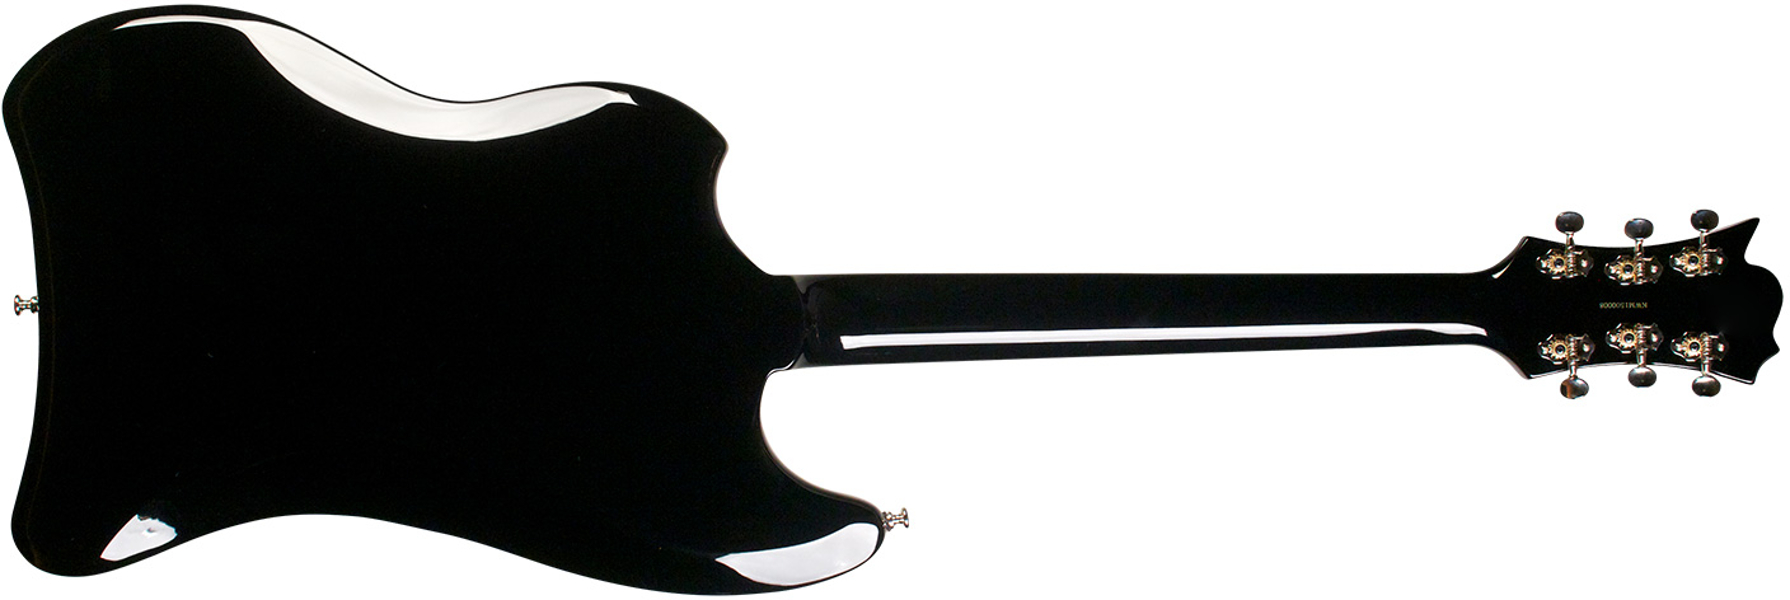 Guild S-200 T-bird - Noir - Guitarra electrica retro rock - Variation 3